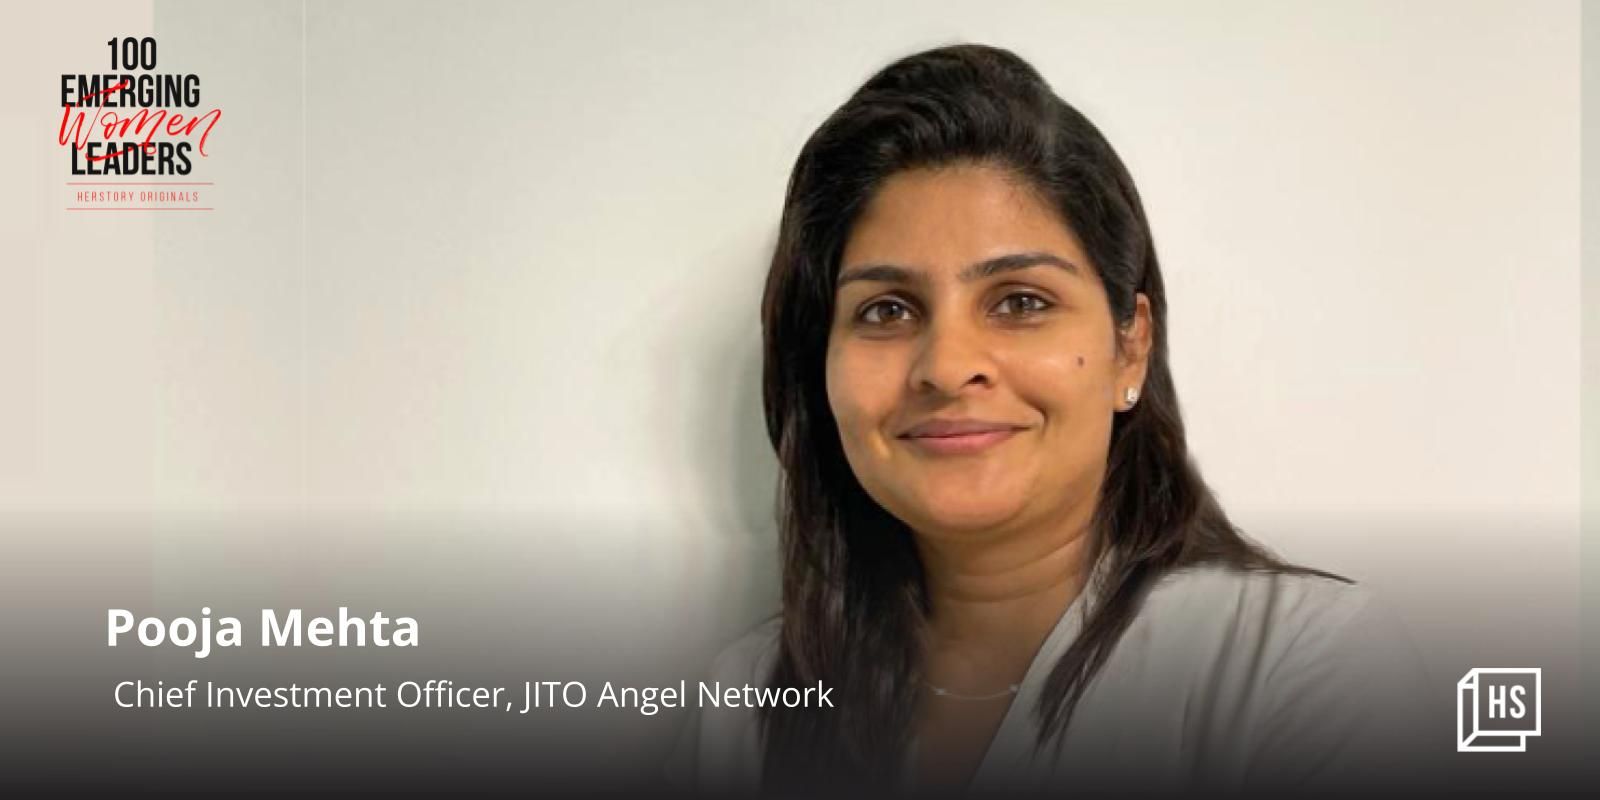 [100 Emerging Women Leaders] JITO Angel Network CIO Pooja Mehta tells how to get things done